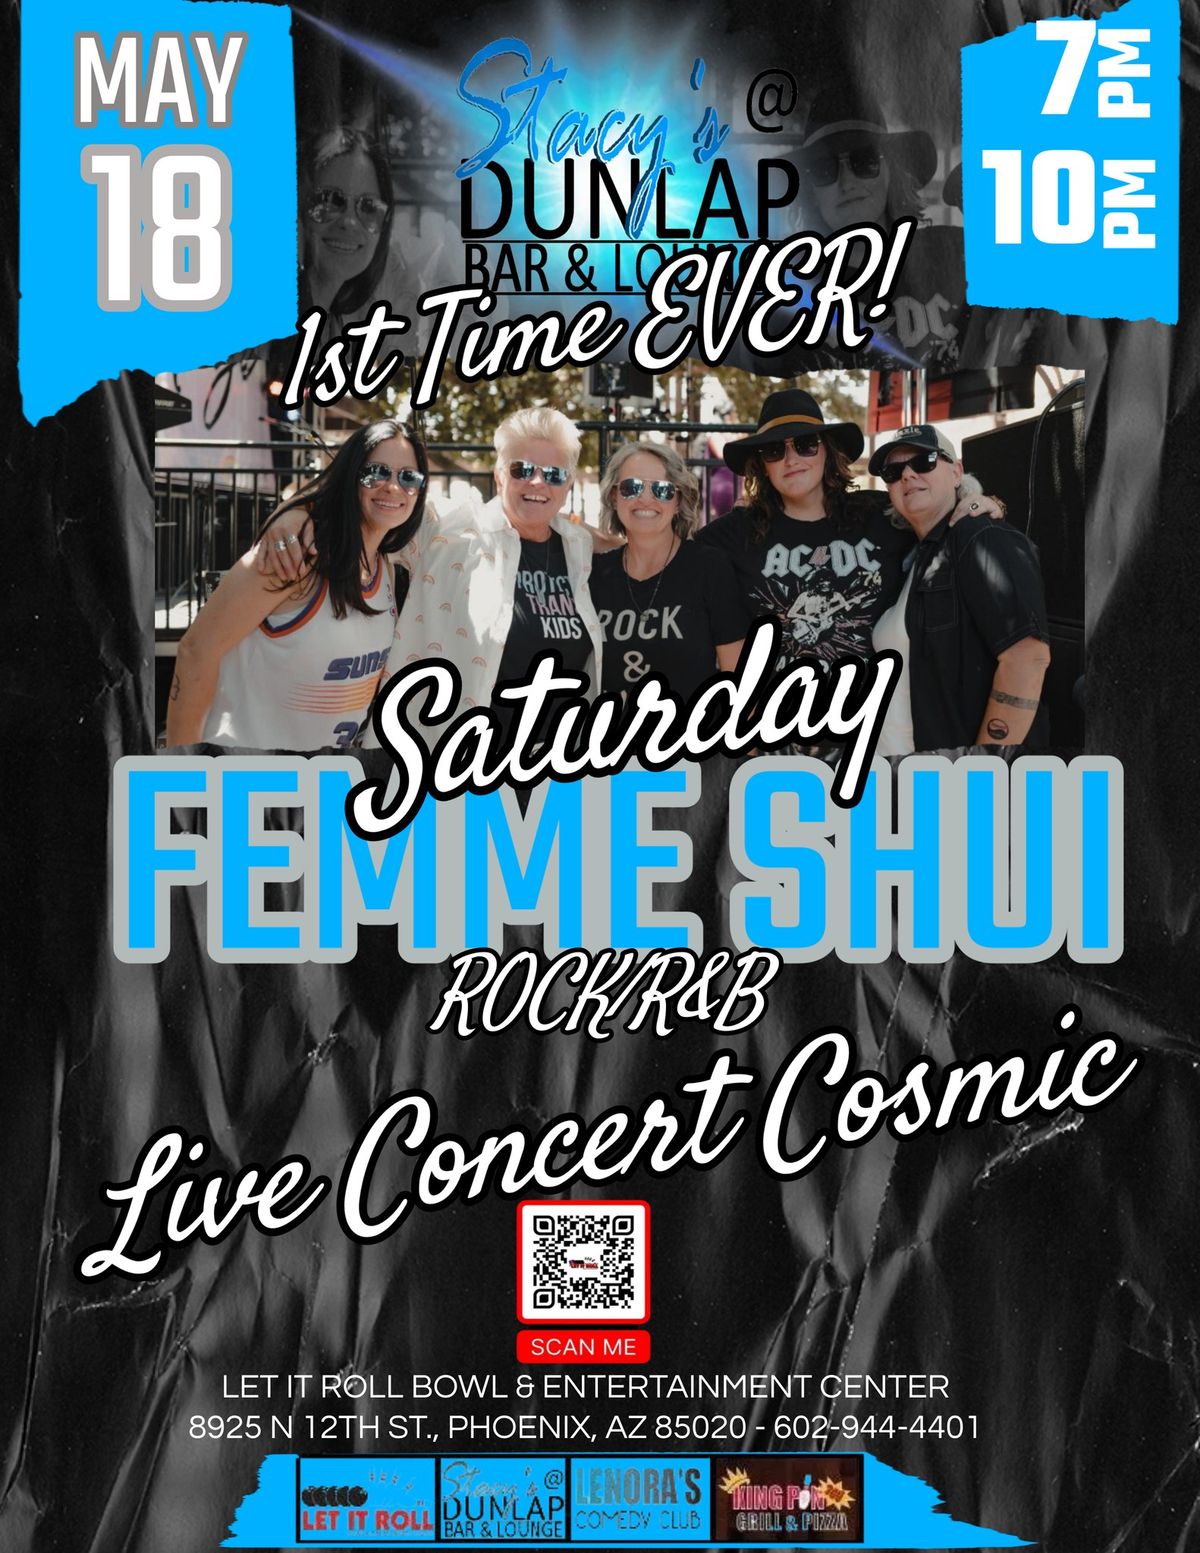 Live Concert Cosmic Event! Music, Dancing, Bowling & Fun!